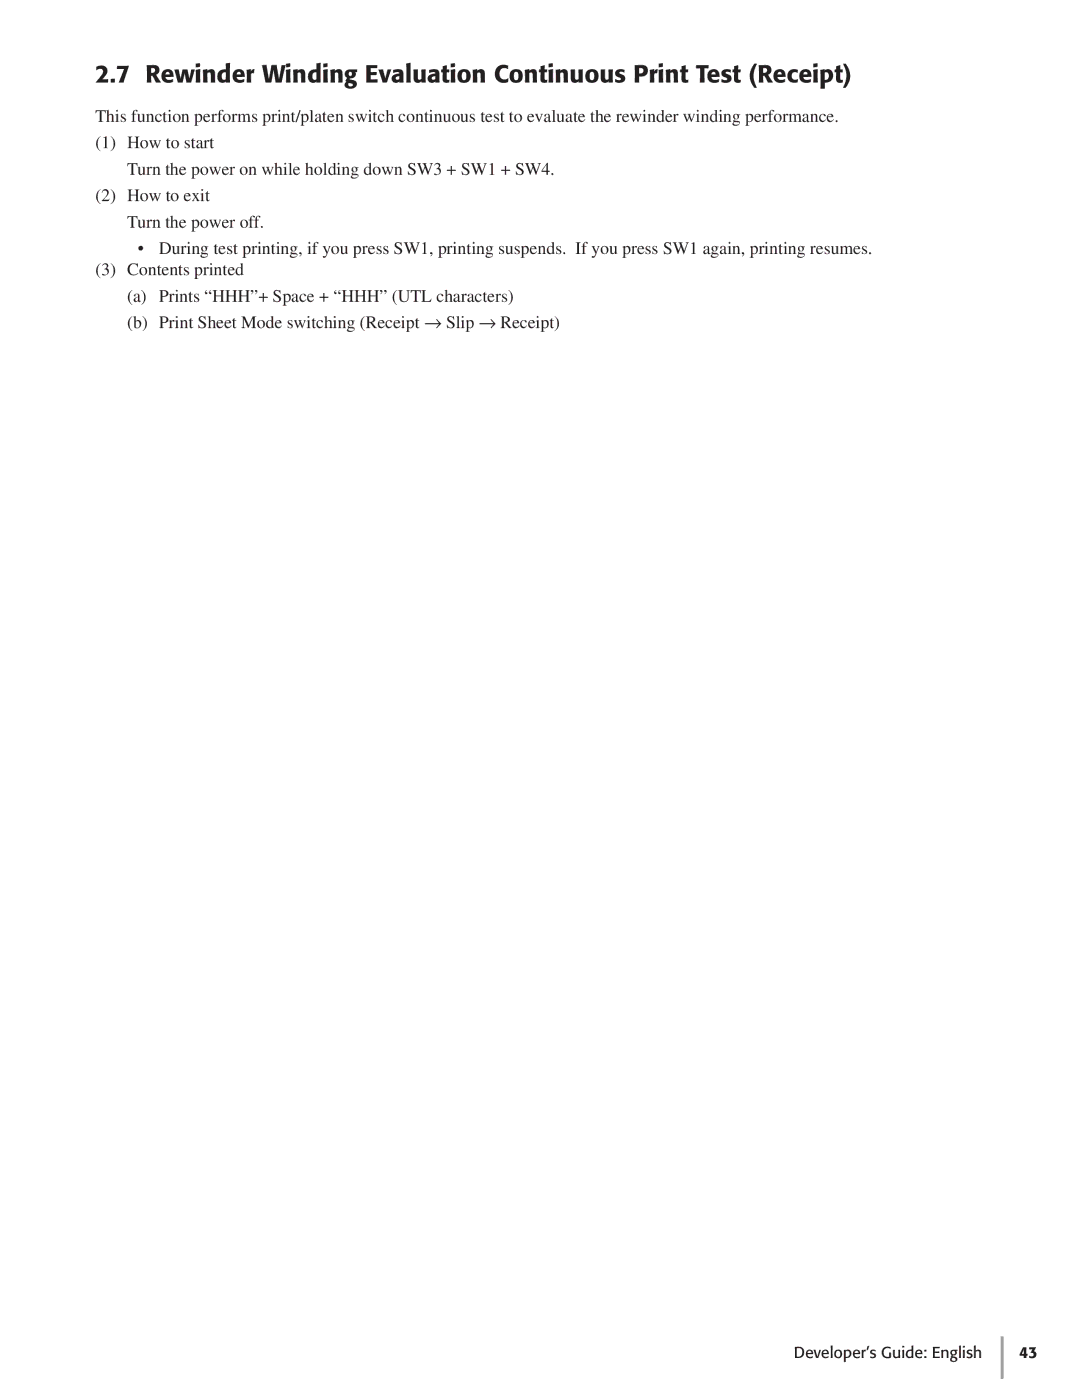 Oki 425S manual Rewinder Winding Evaluation Continuous Print Test Receipt 